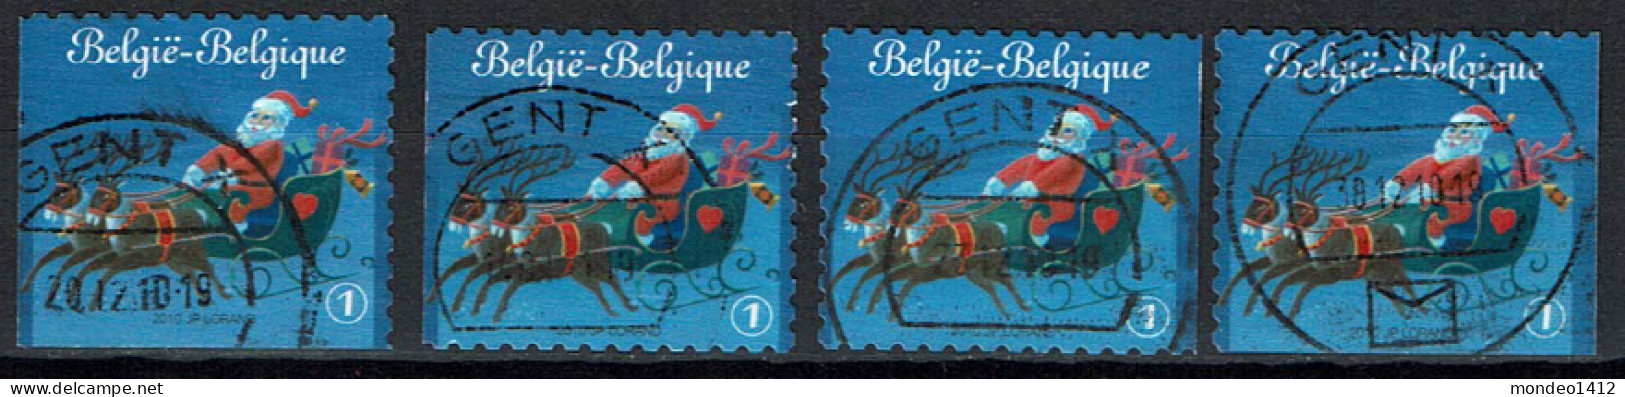 België OBP 4087 - Merry Christmas Santa Claus - Self Adhesive Complete - Usados